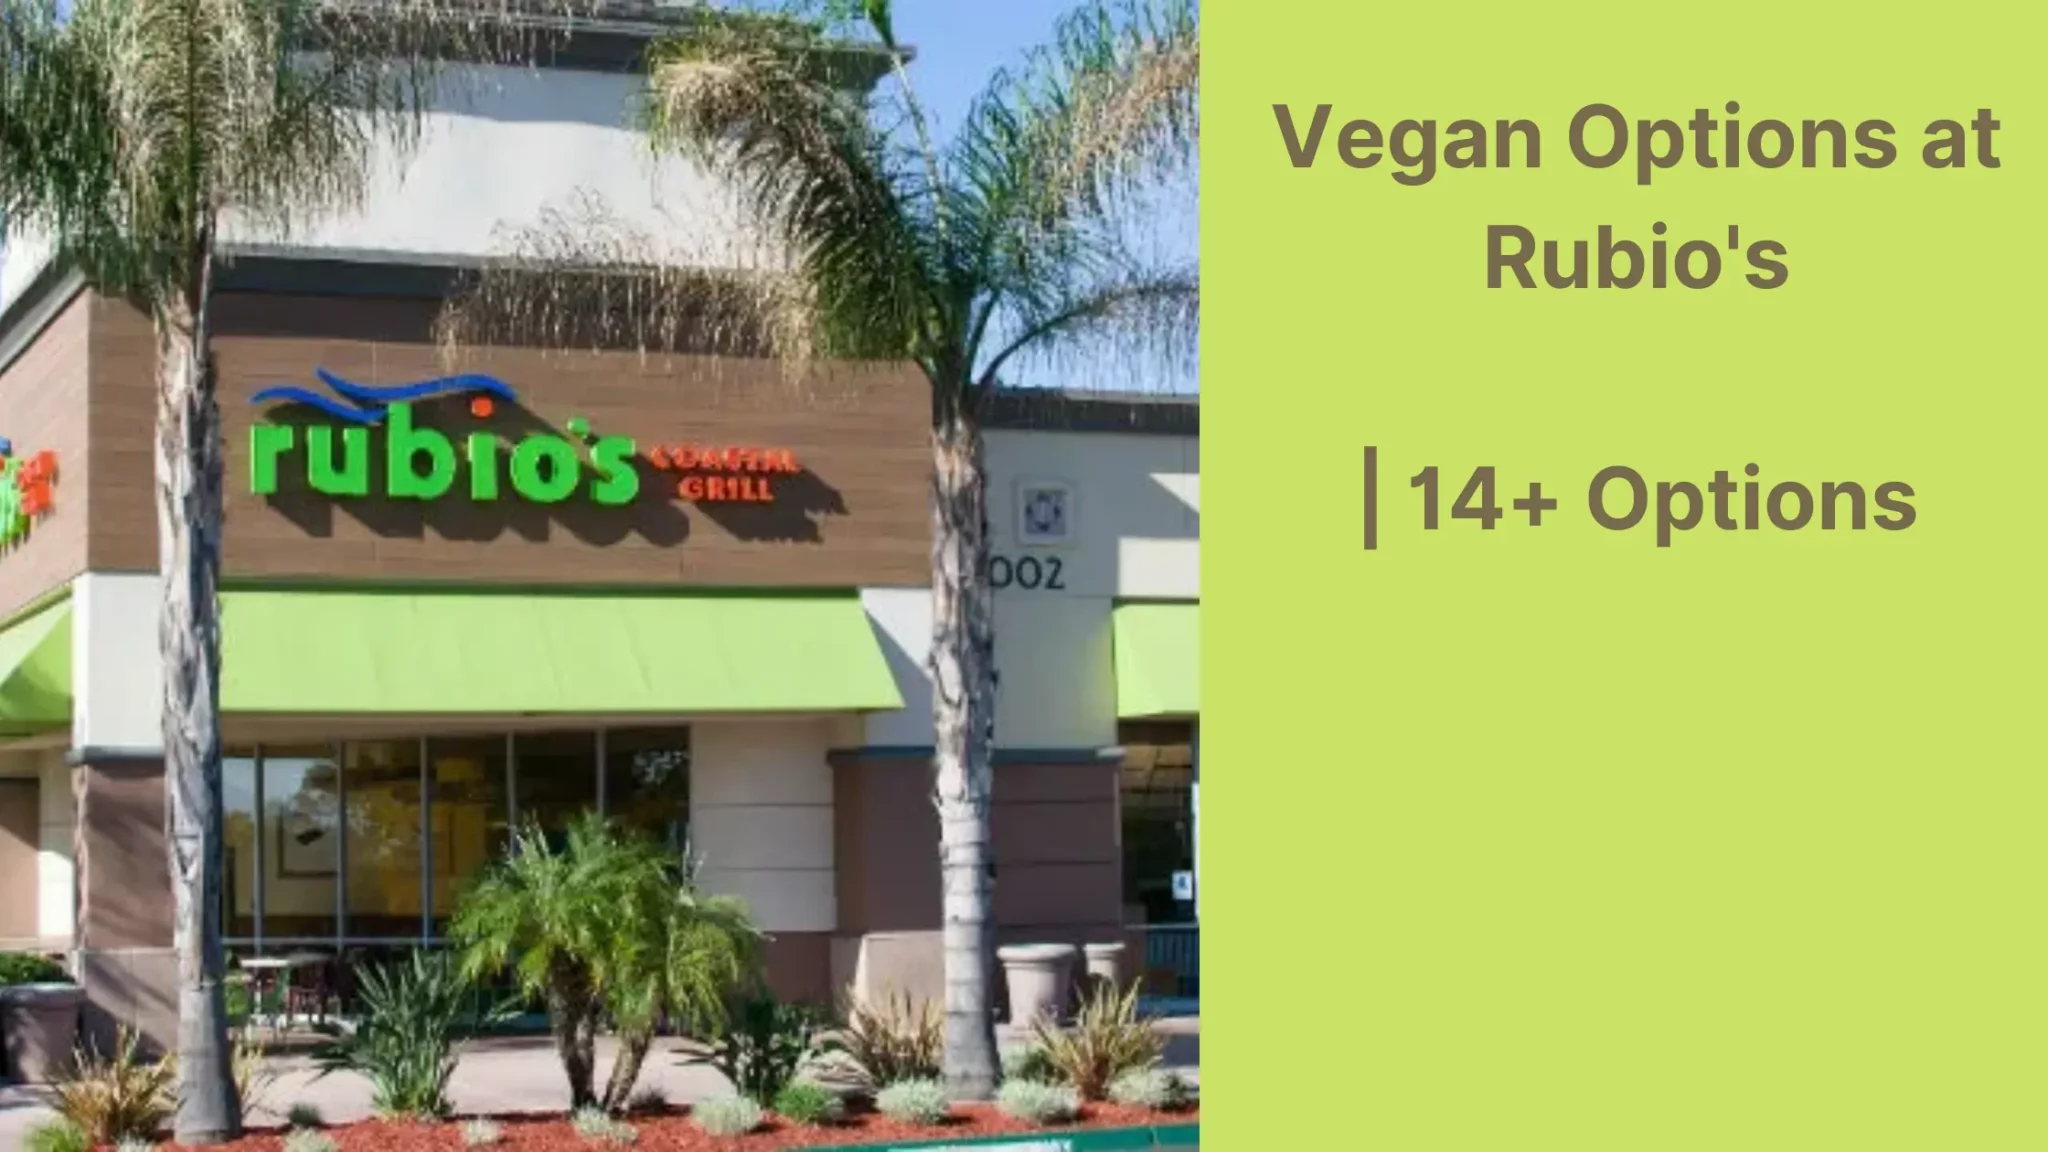 Vegan Options at Rubio’s